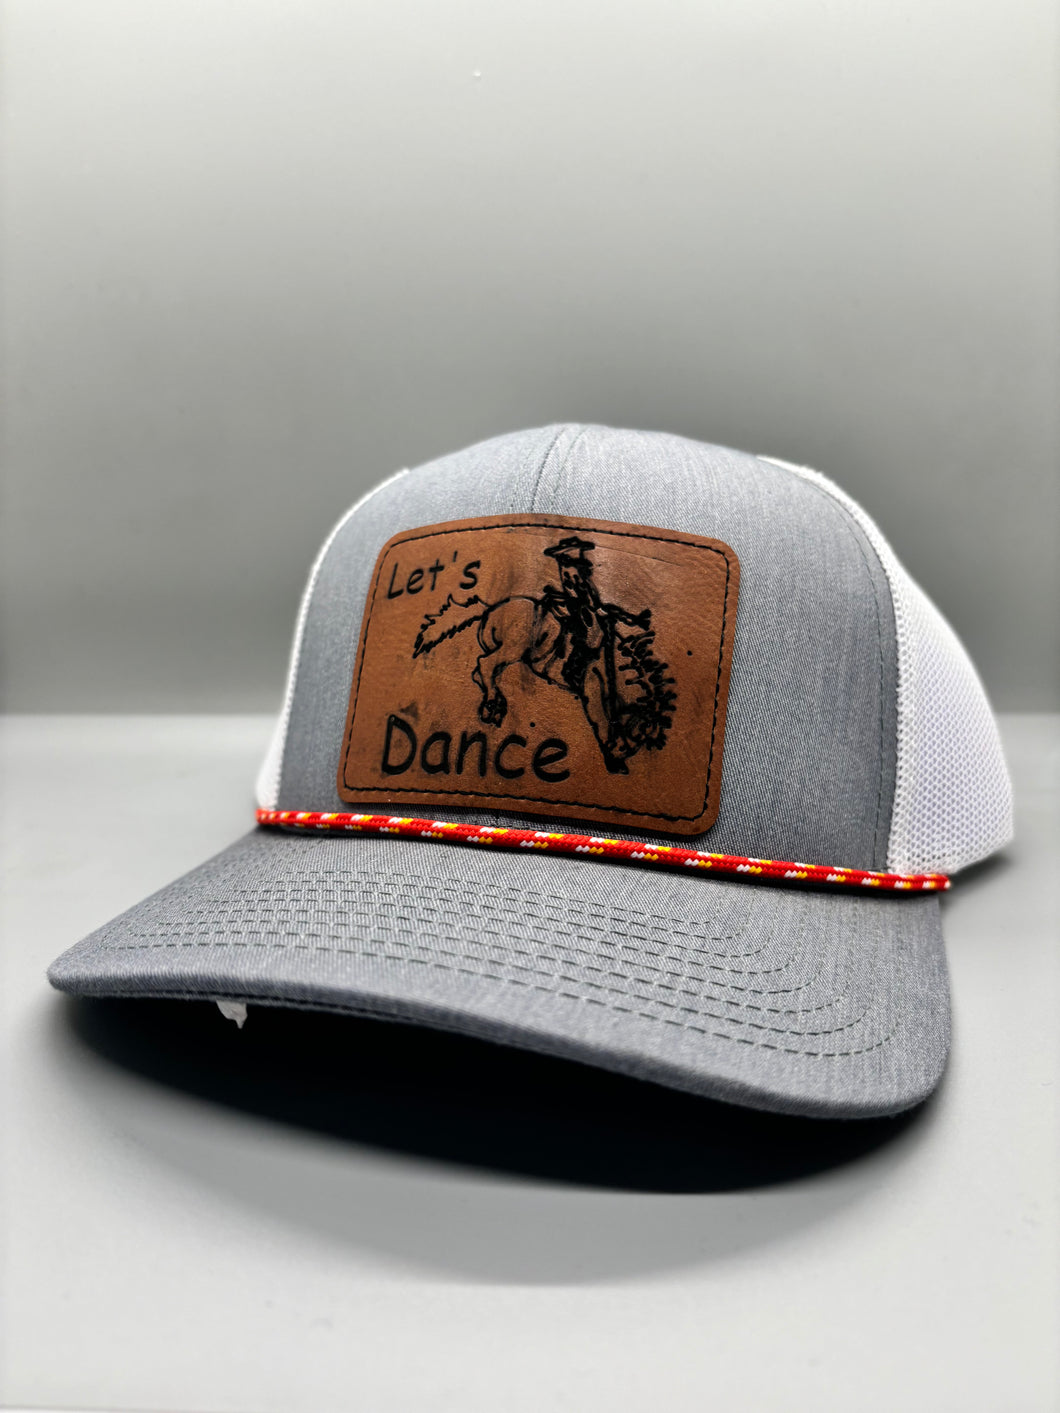 Let’s Dance leather patch hat